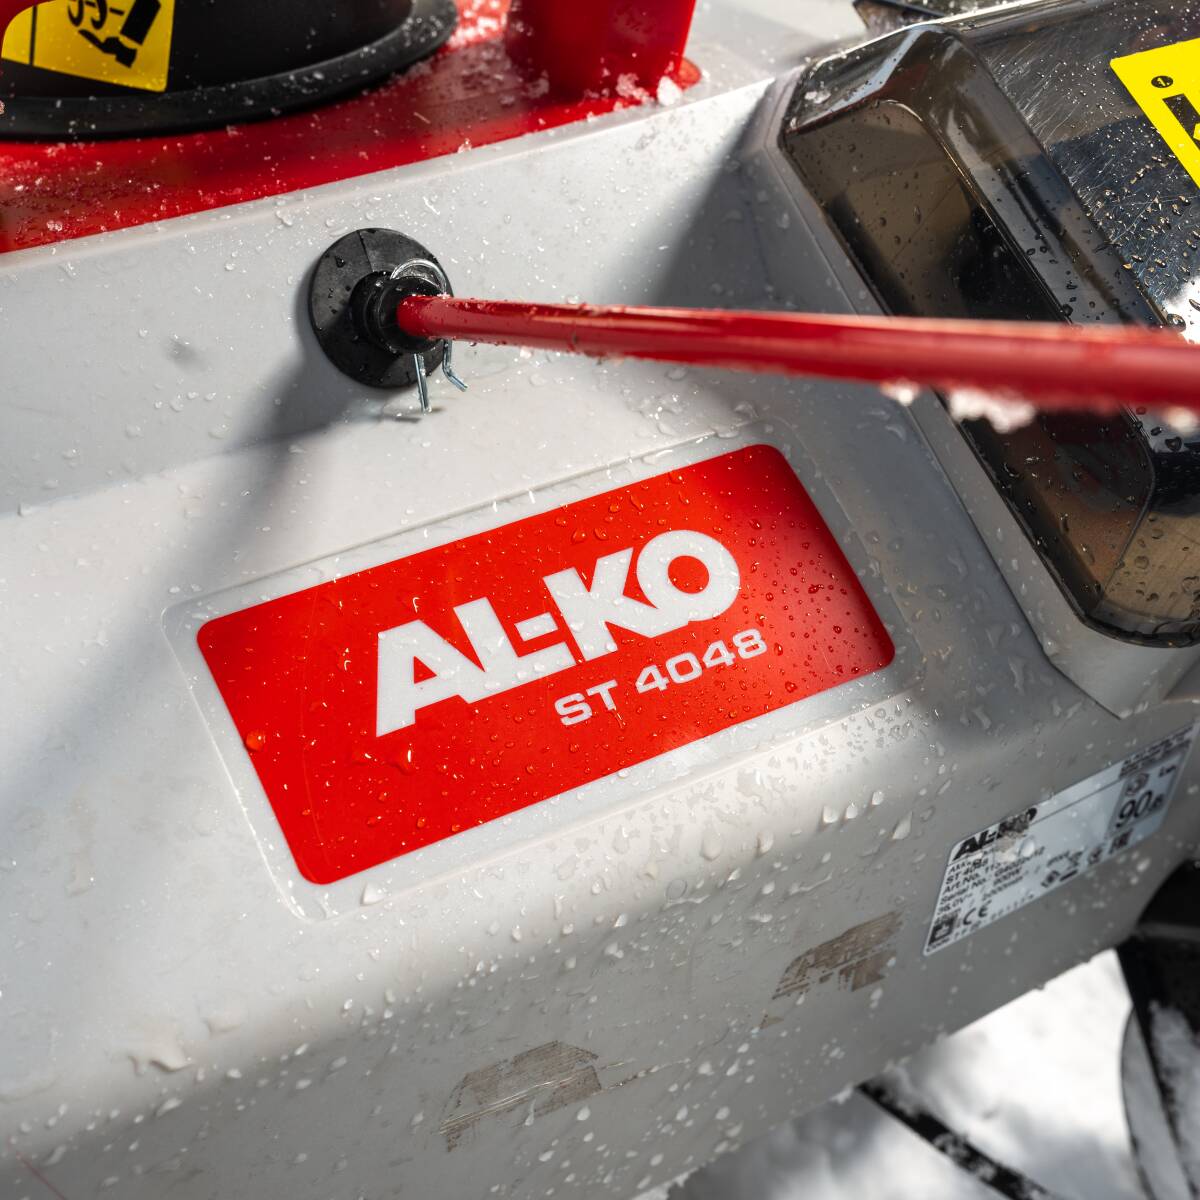 Al-Ko Akku-Schneefräse ST 4048 Energy Flex Solo kaufen bei OBI